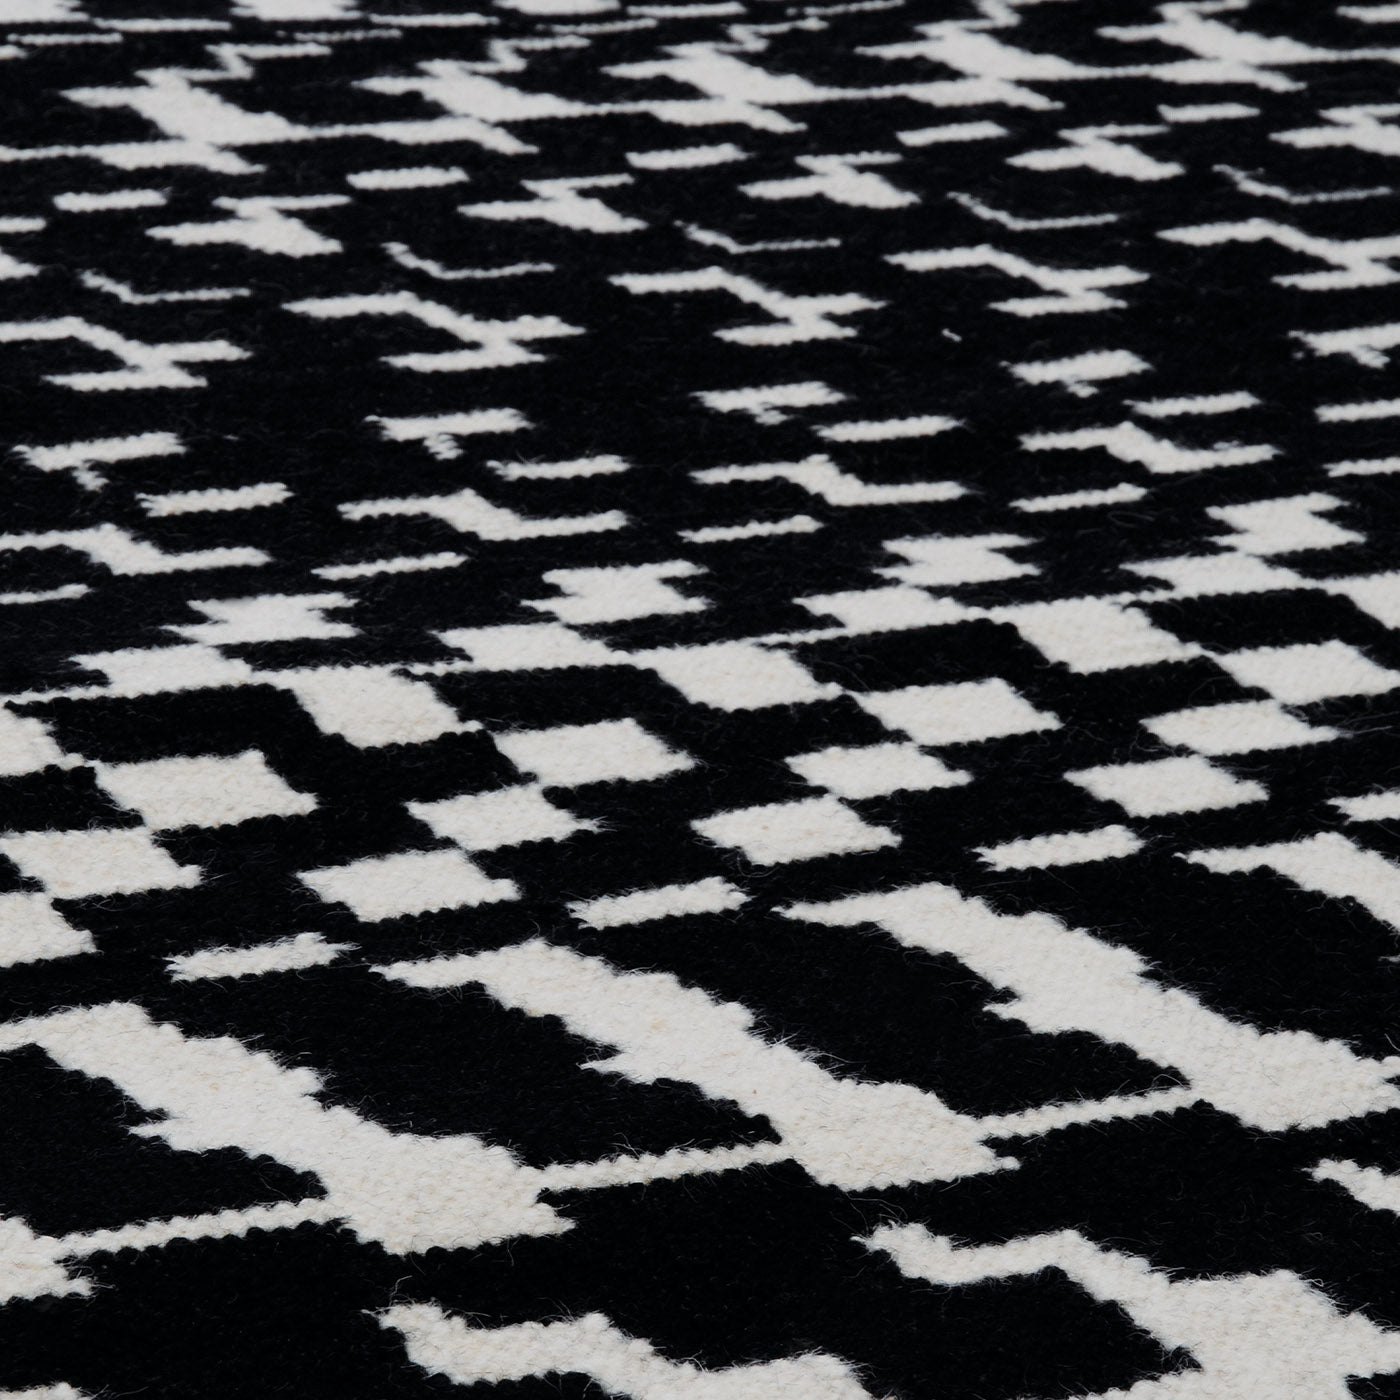 Grand tapis noir et blanc Fuoritempo - Vue alternative 1